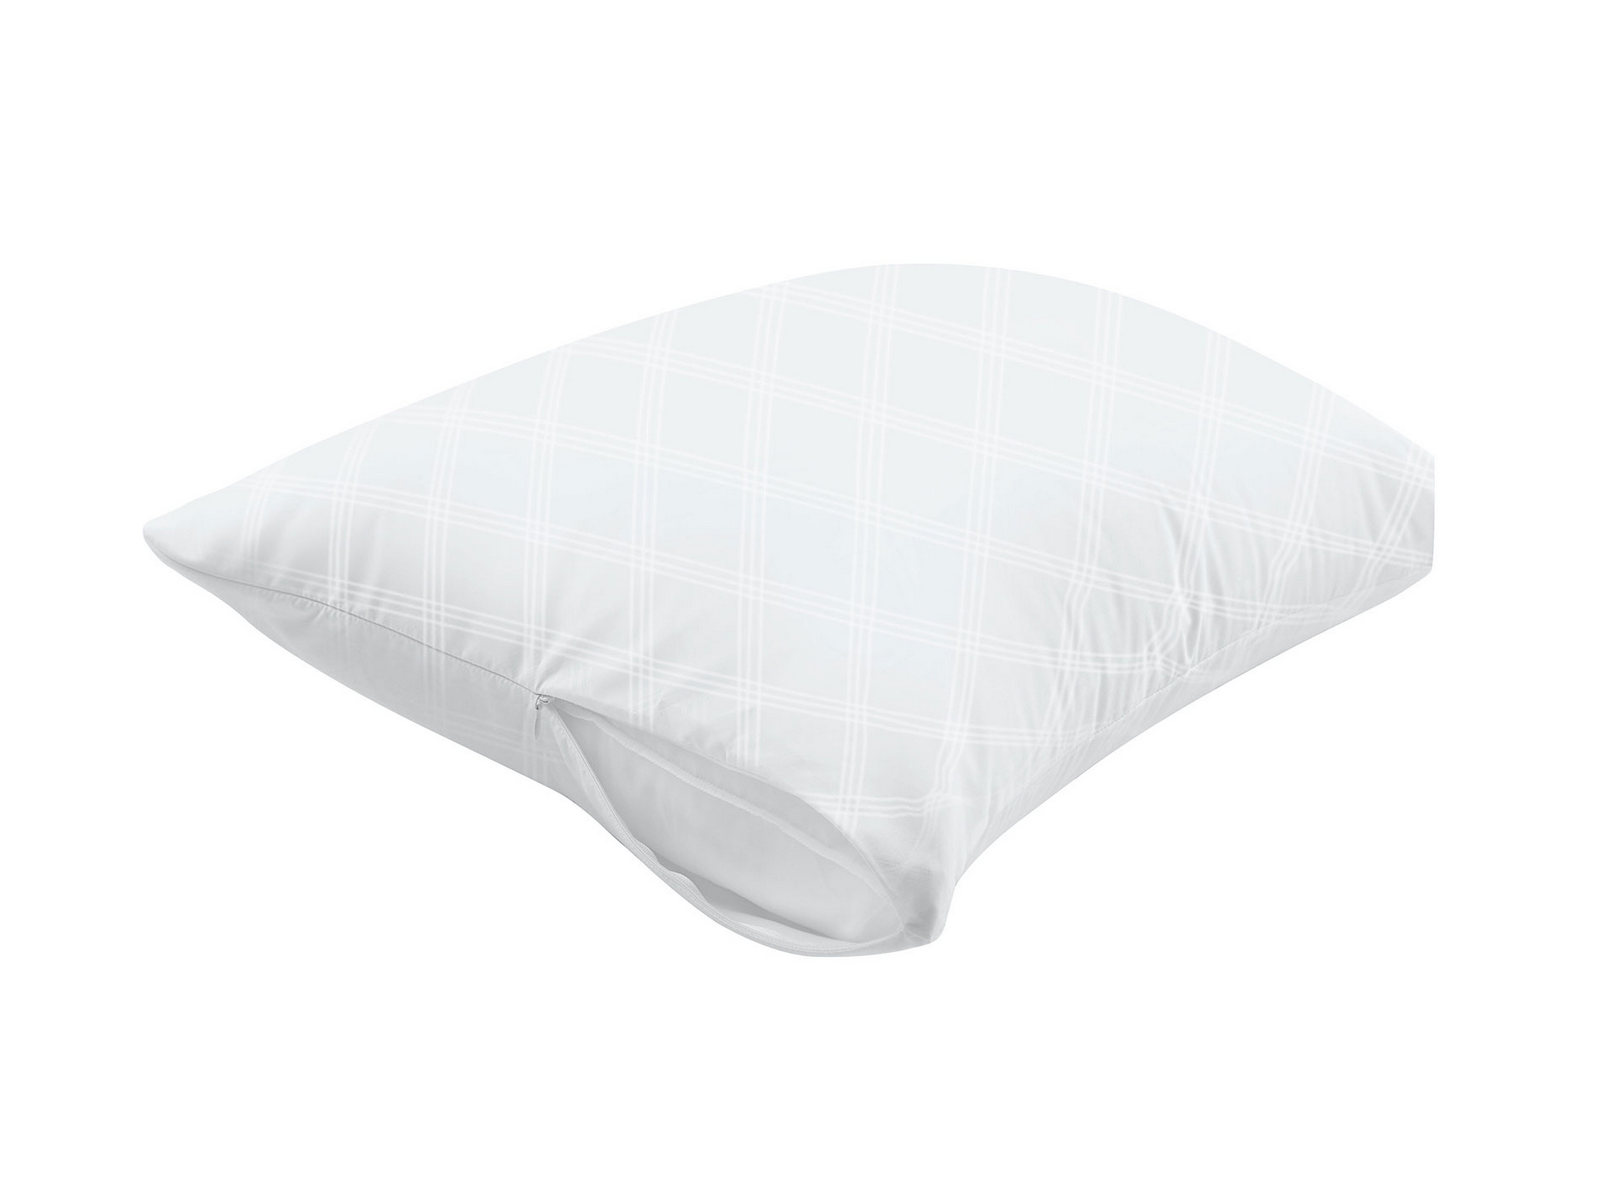 Allerease Standard/Queen Ultimate Pillow Protector